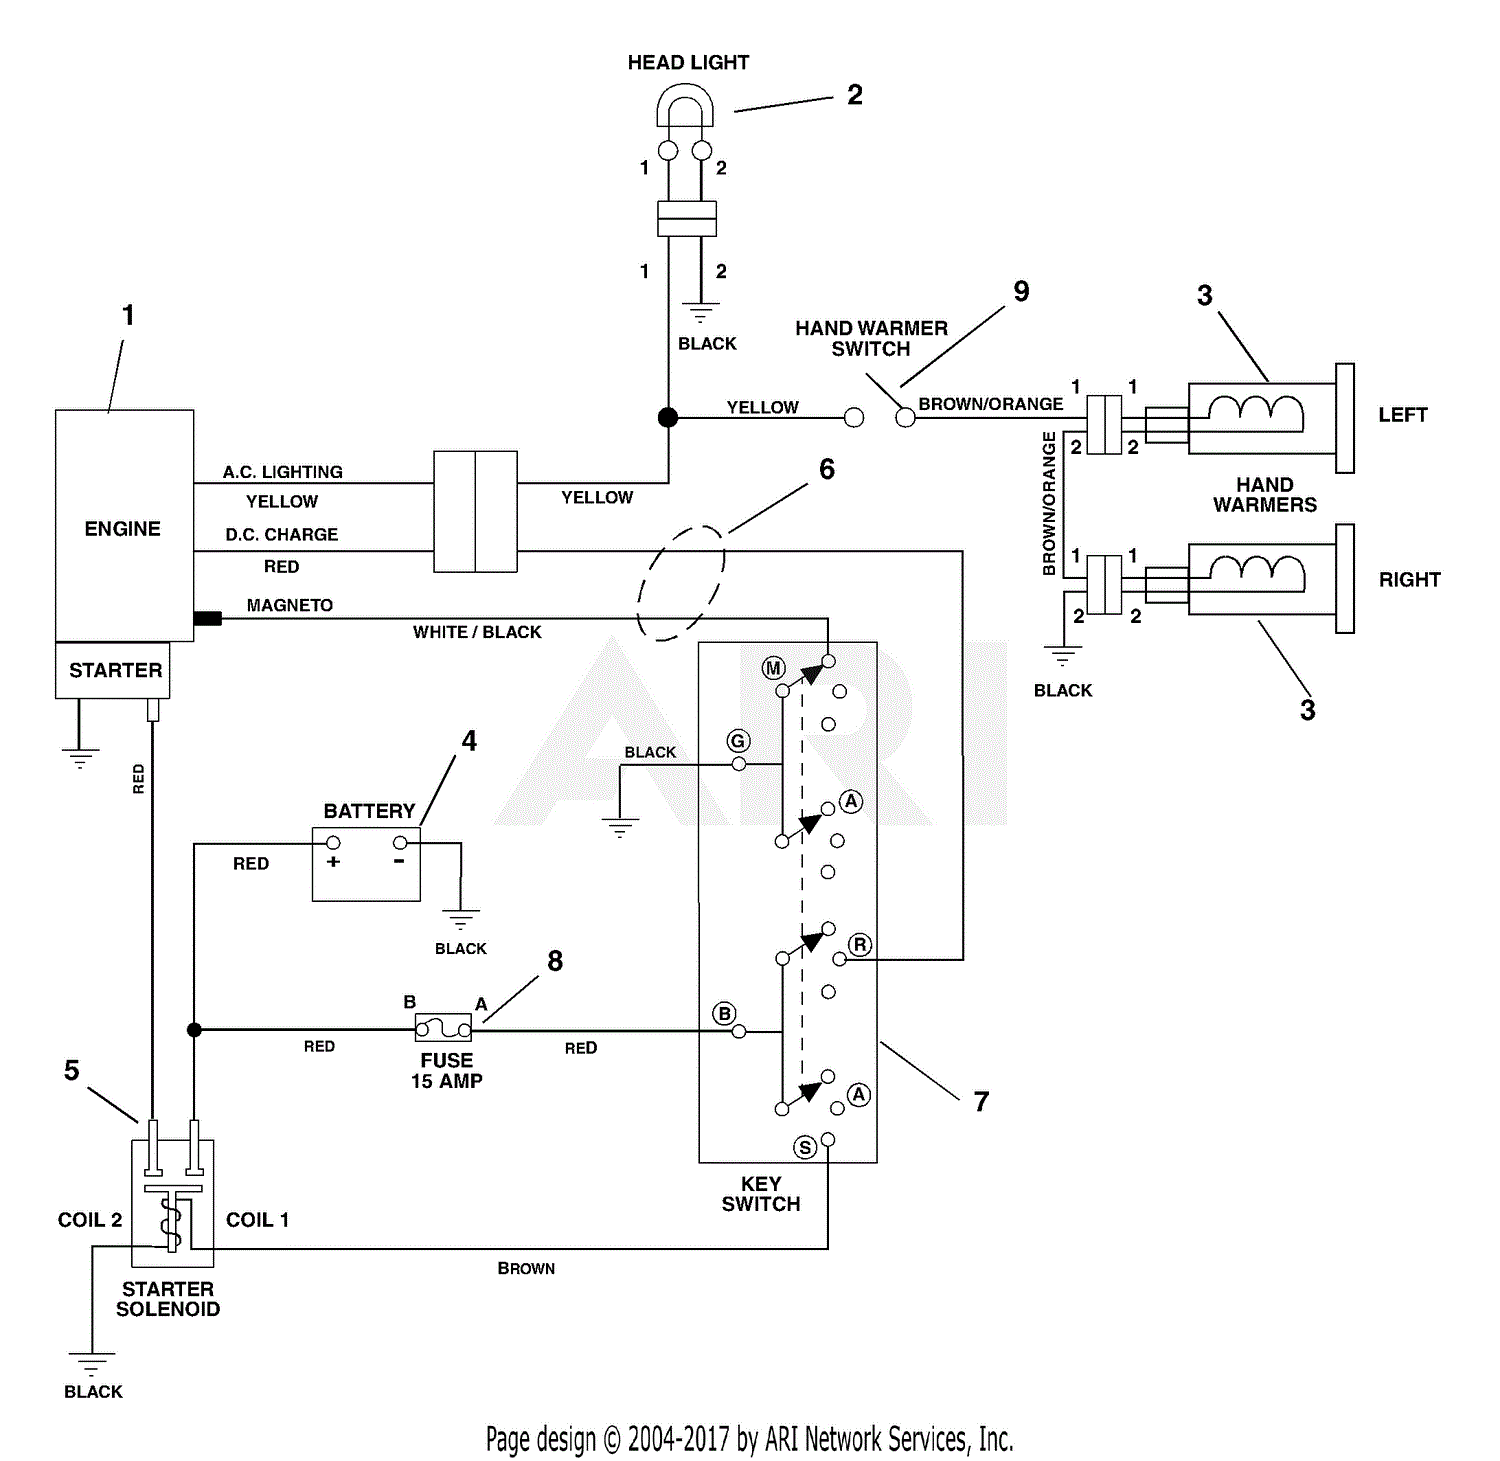 [DIAGRAM] Evinrude 175 E Tec Wiring Diagram FULL Version HD Quality